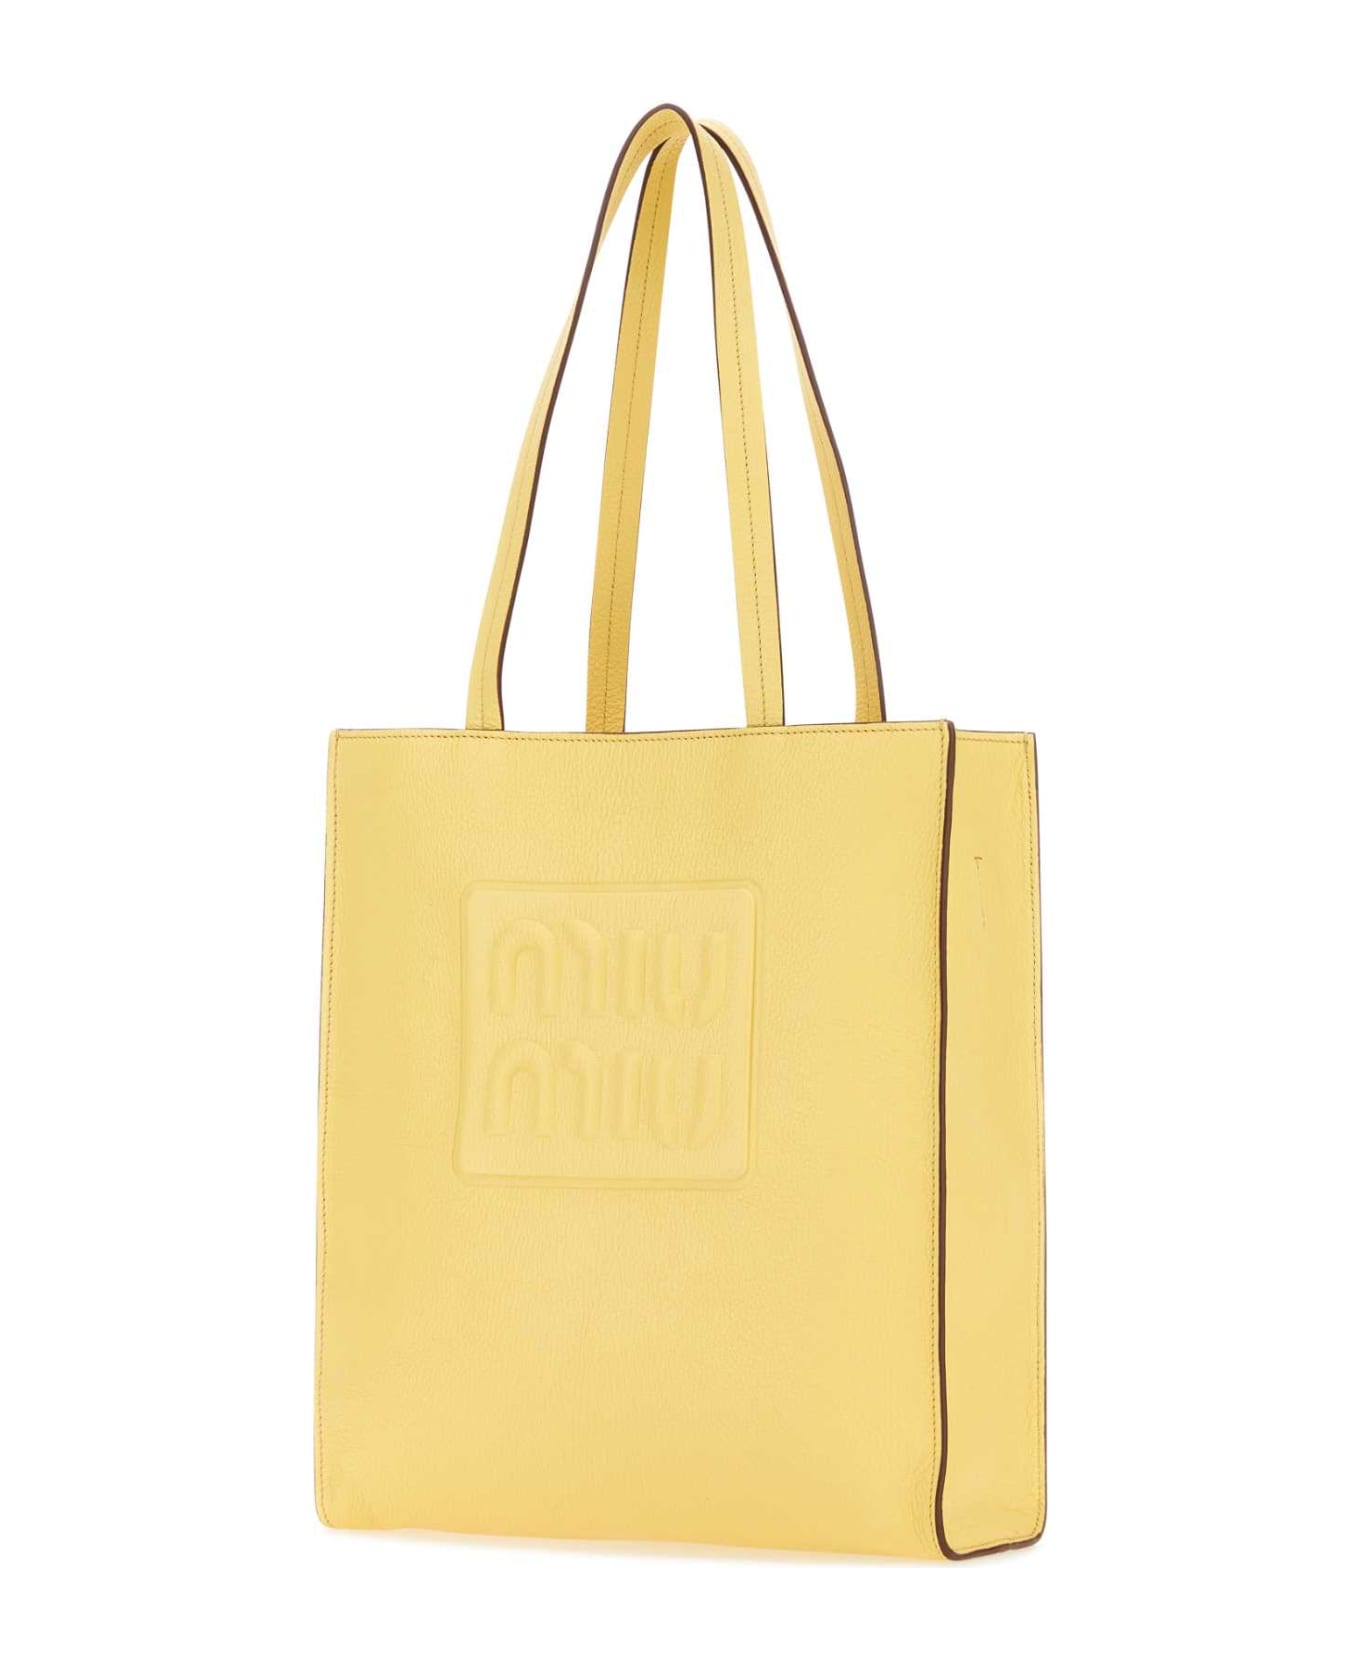 Miu Miu Pastel Yellow Leather Shopping Bag - LIMONE